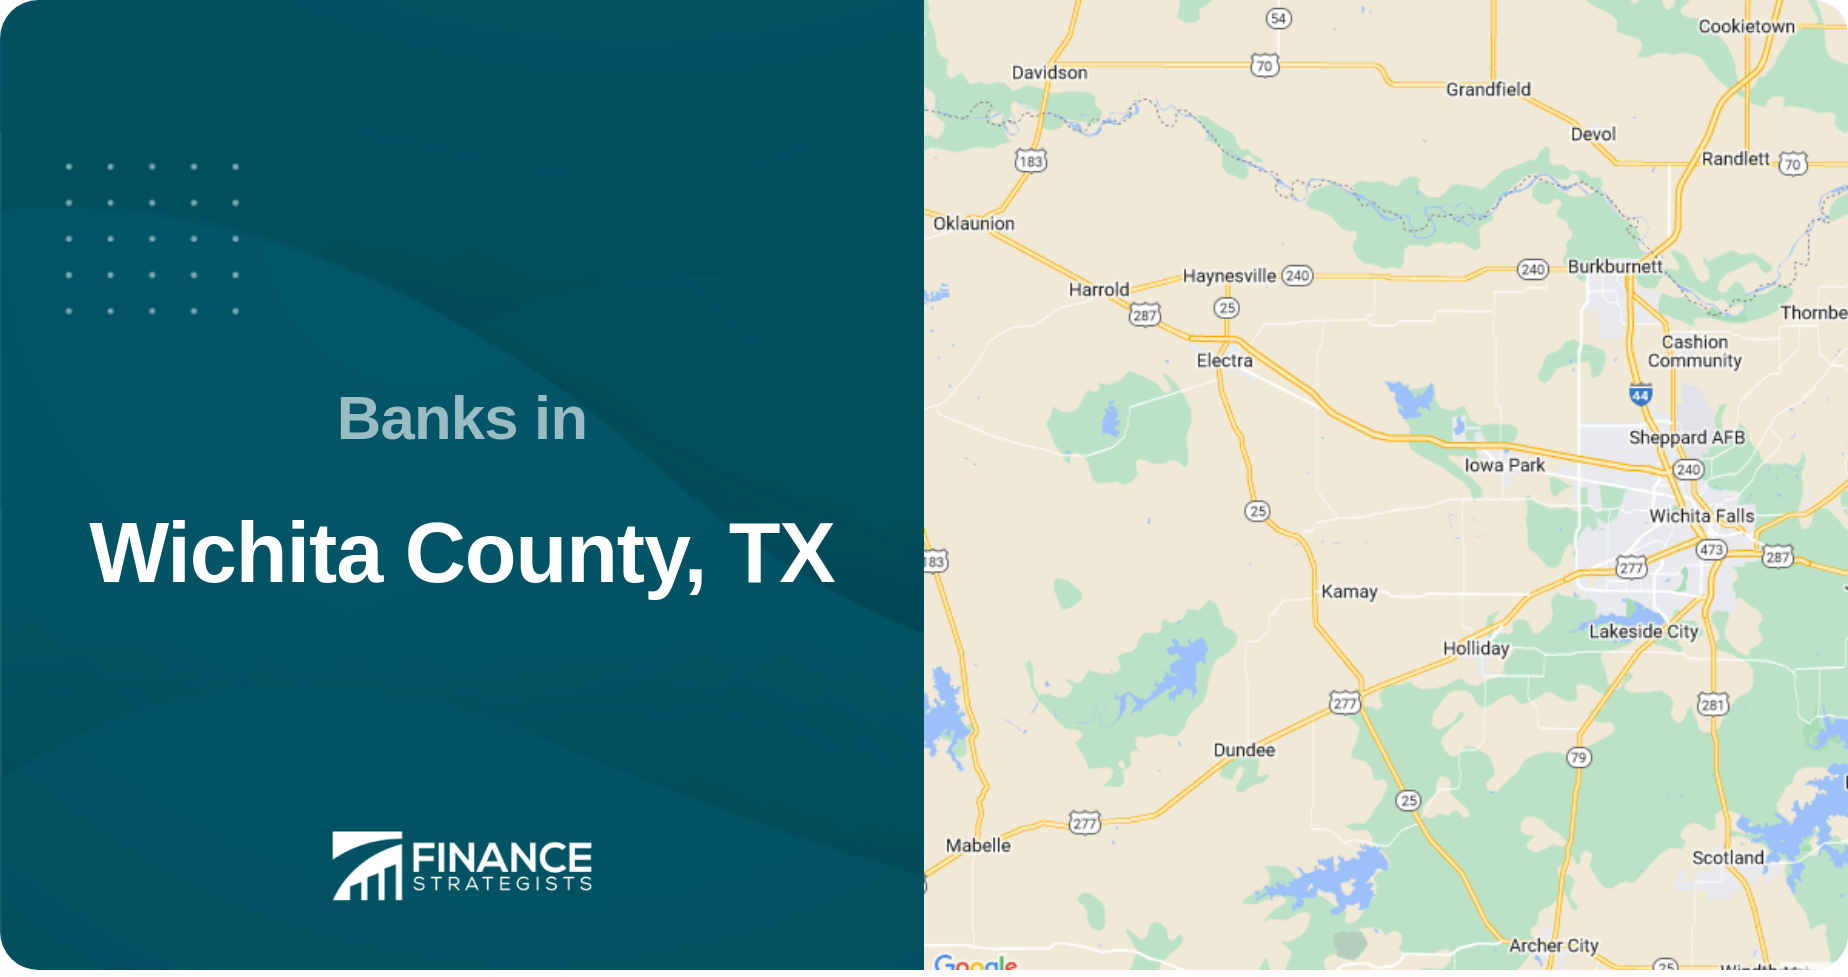 Banks in Wichita County, TX